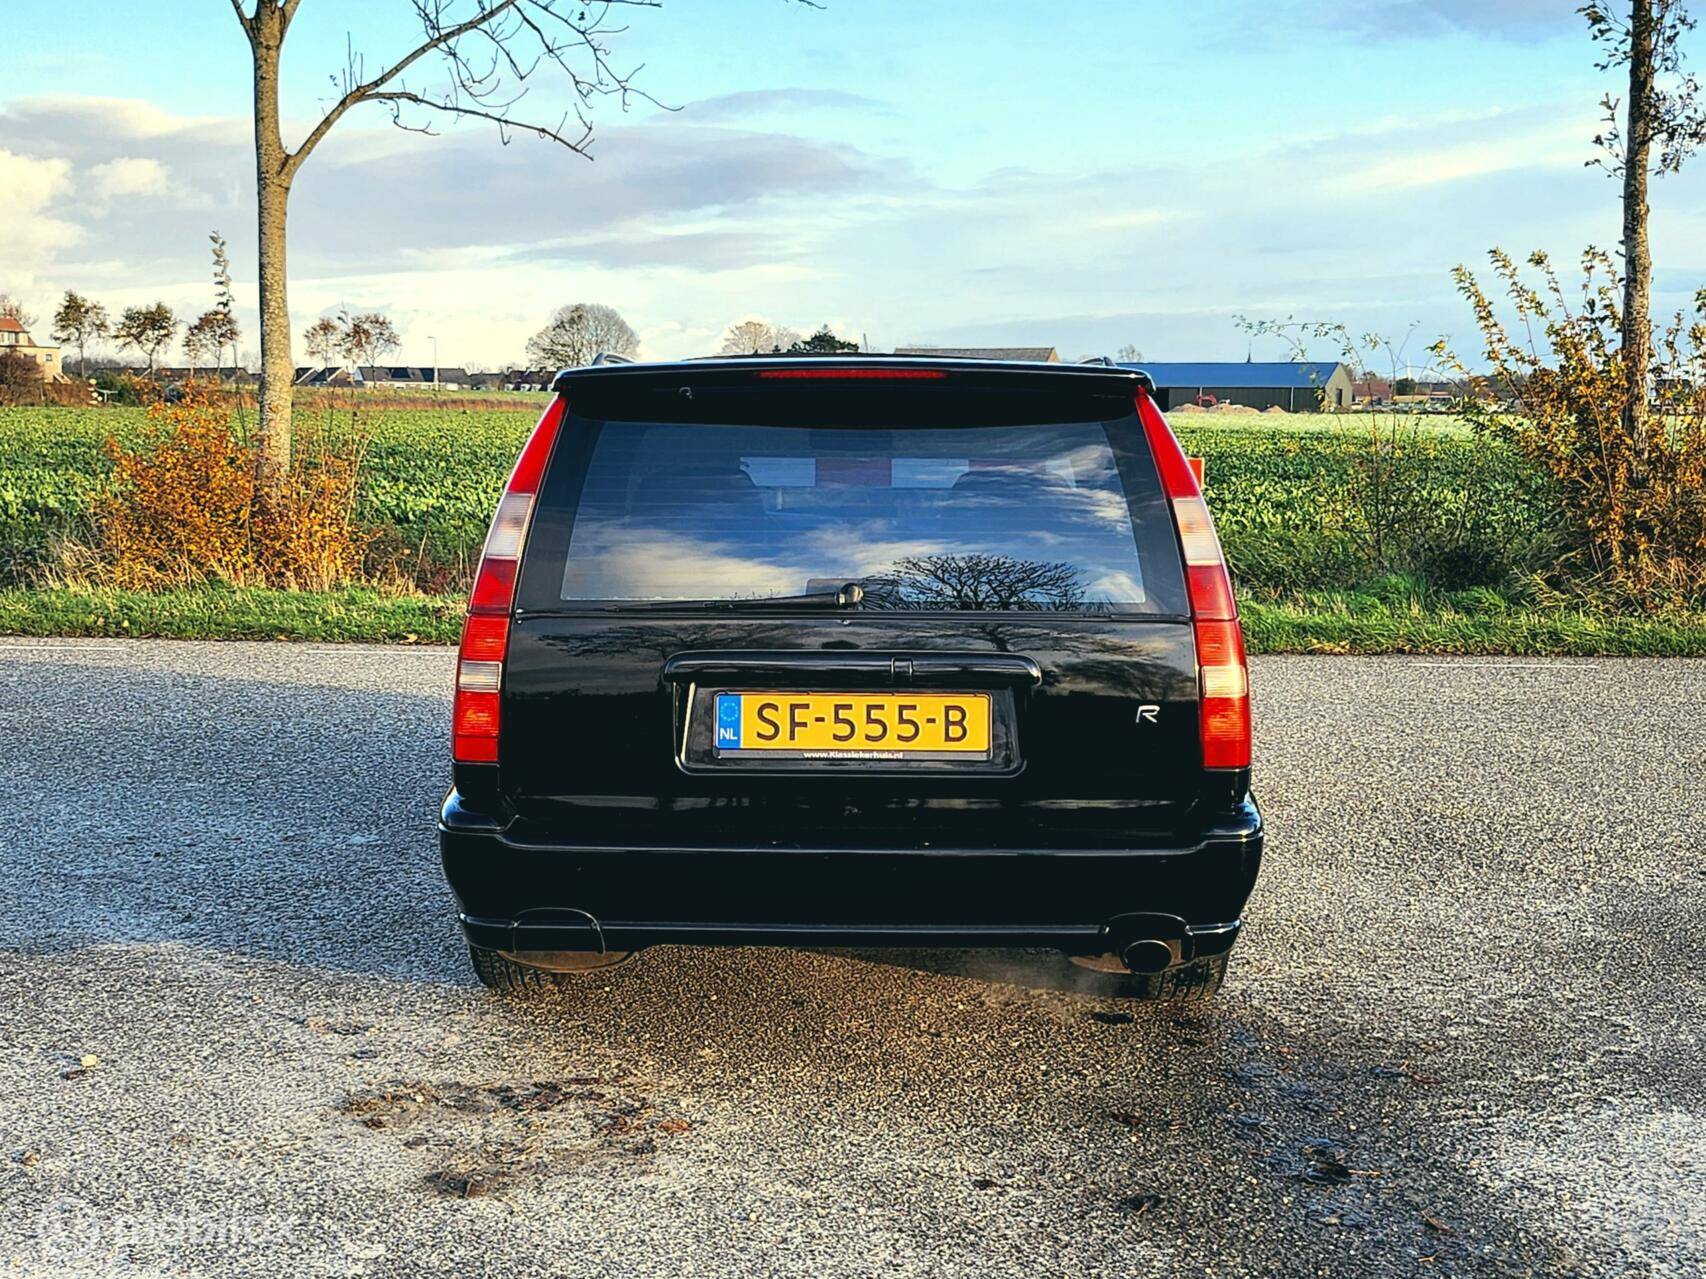 For Sale: Volvo V70 R (1998) offered for €9,450